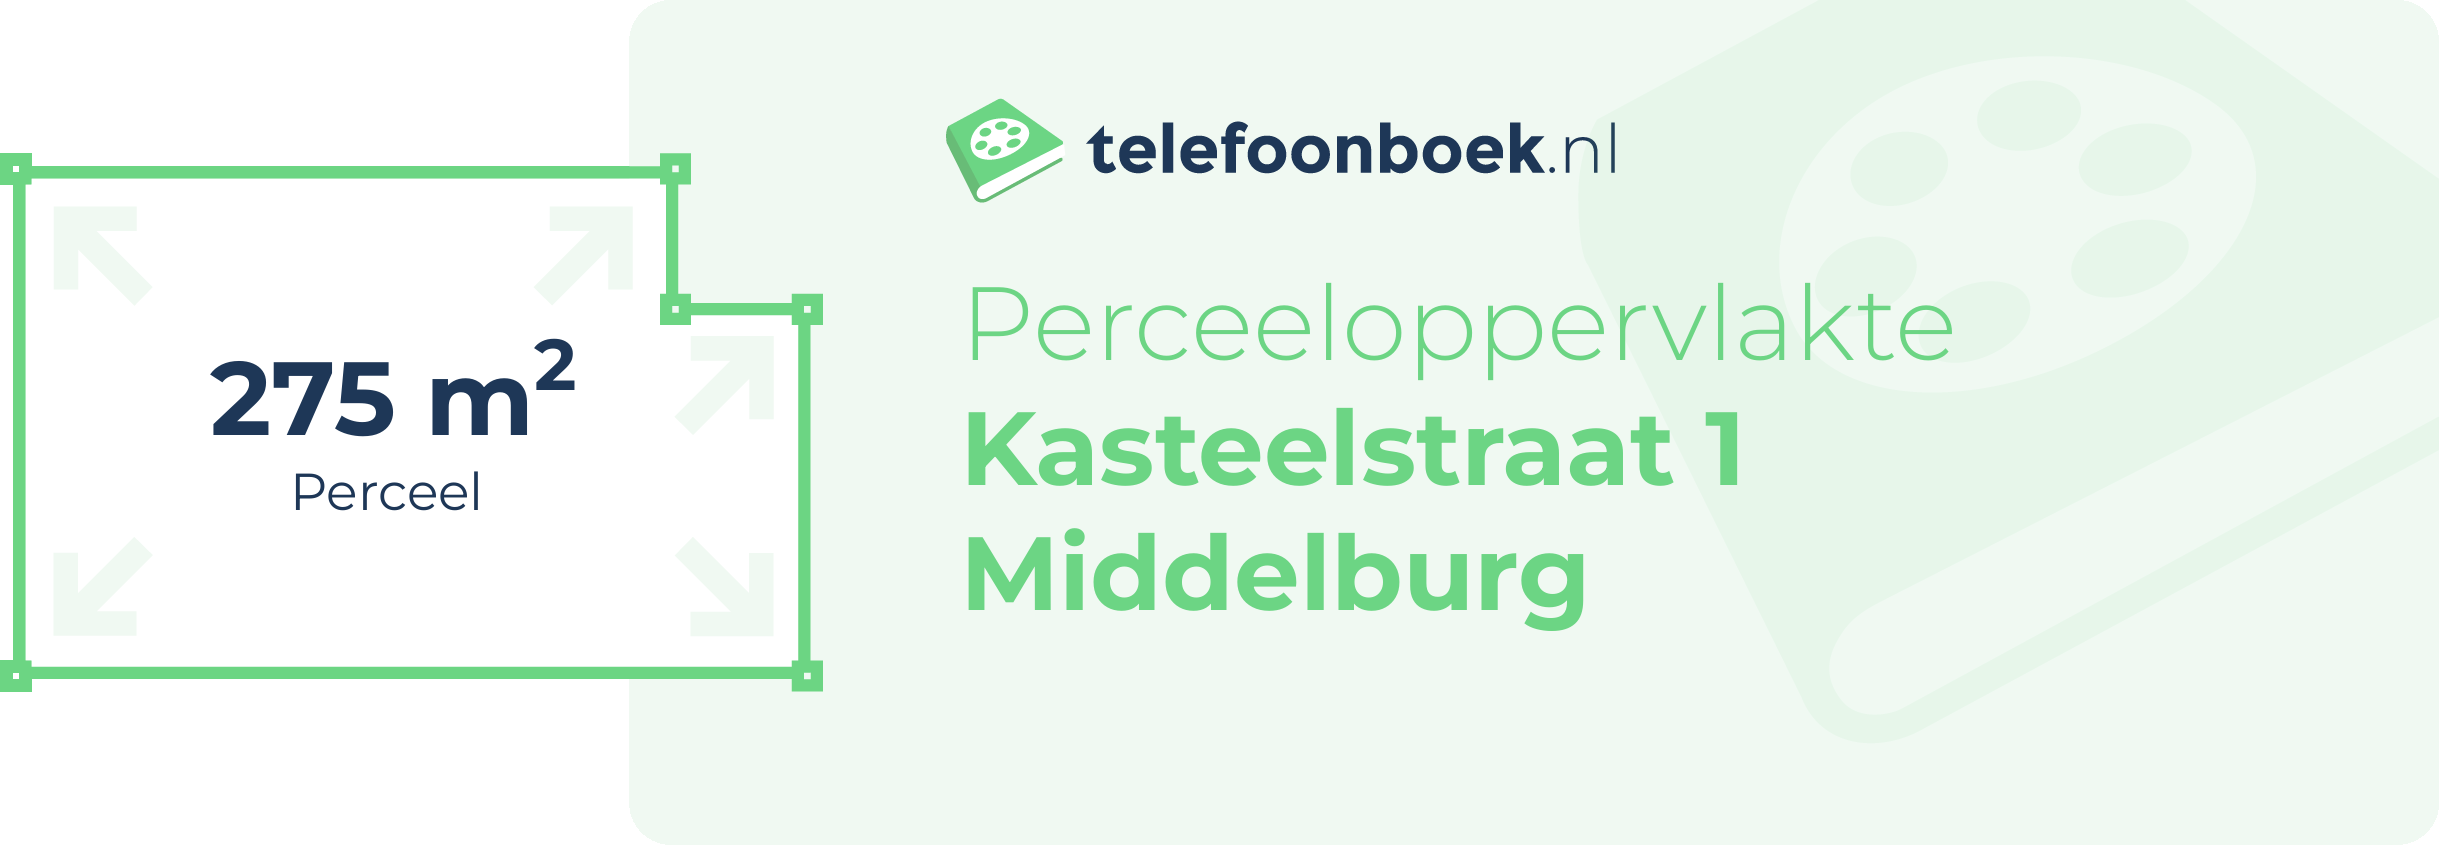 Perceeloppervlakte Kasteelstraat 1 Middelburg